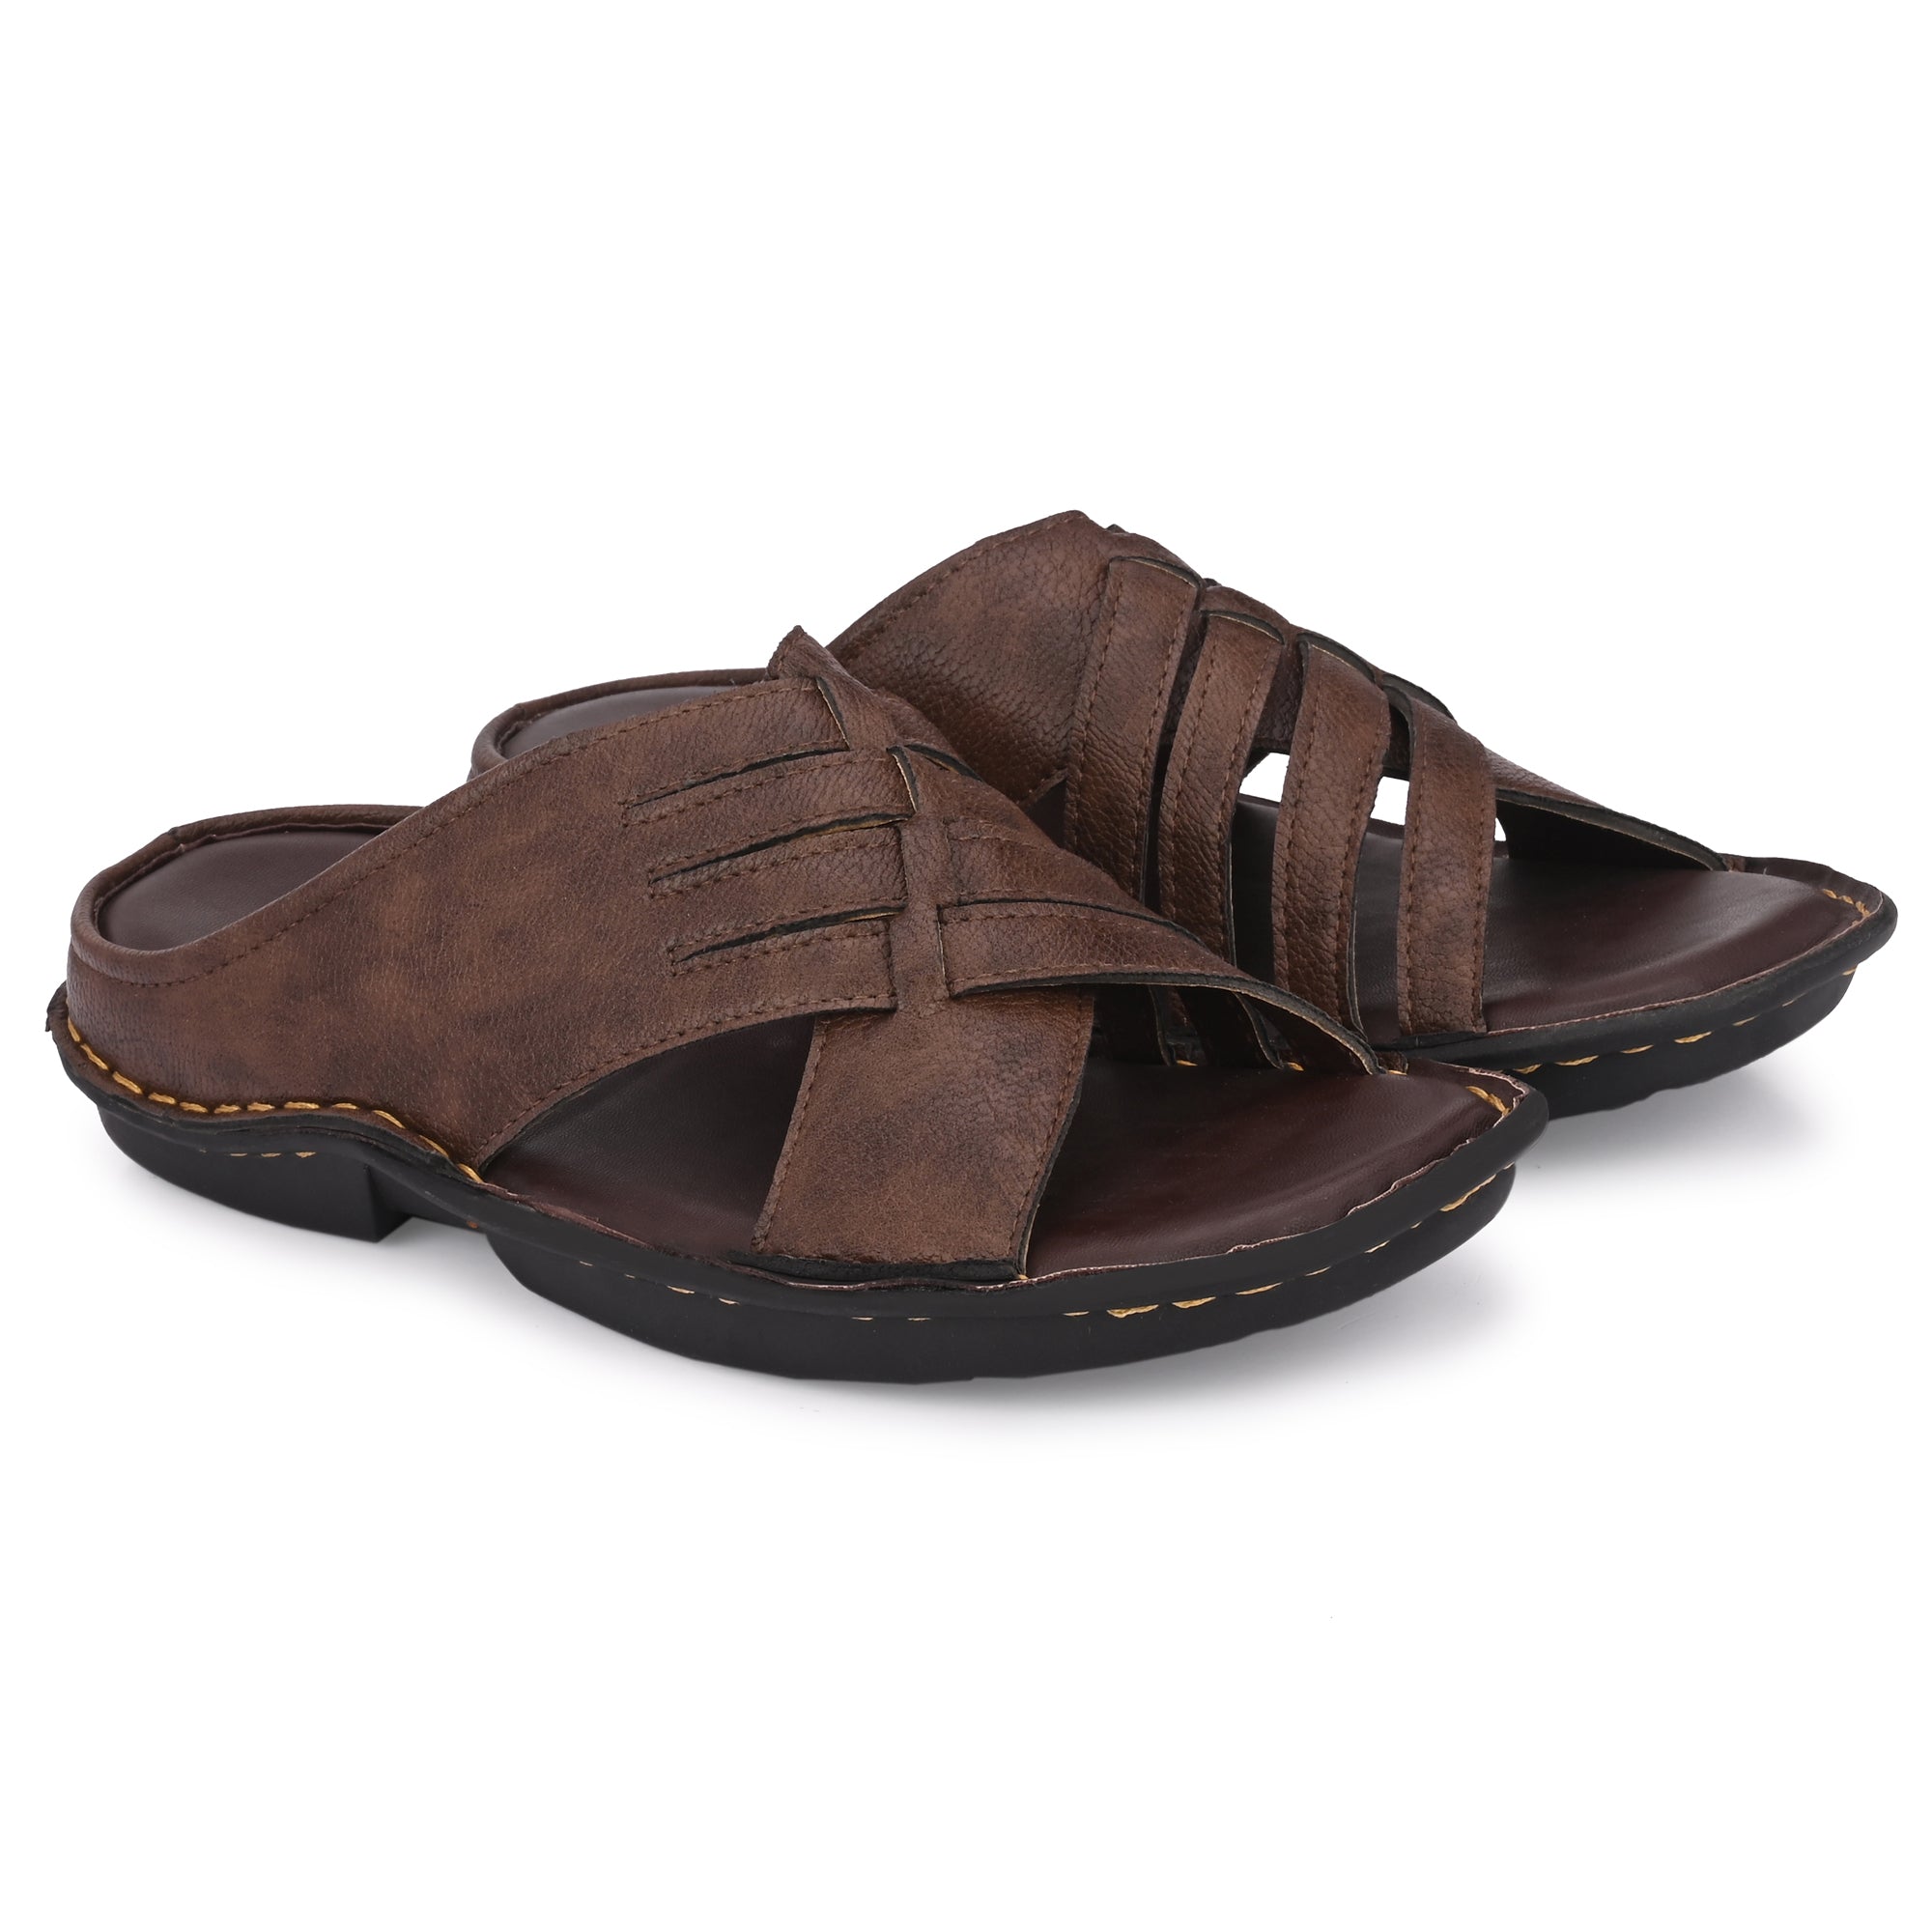 Attitudist Handicrafted Brown Leather Slipper For Men - ATTITUDIST